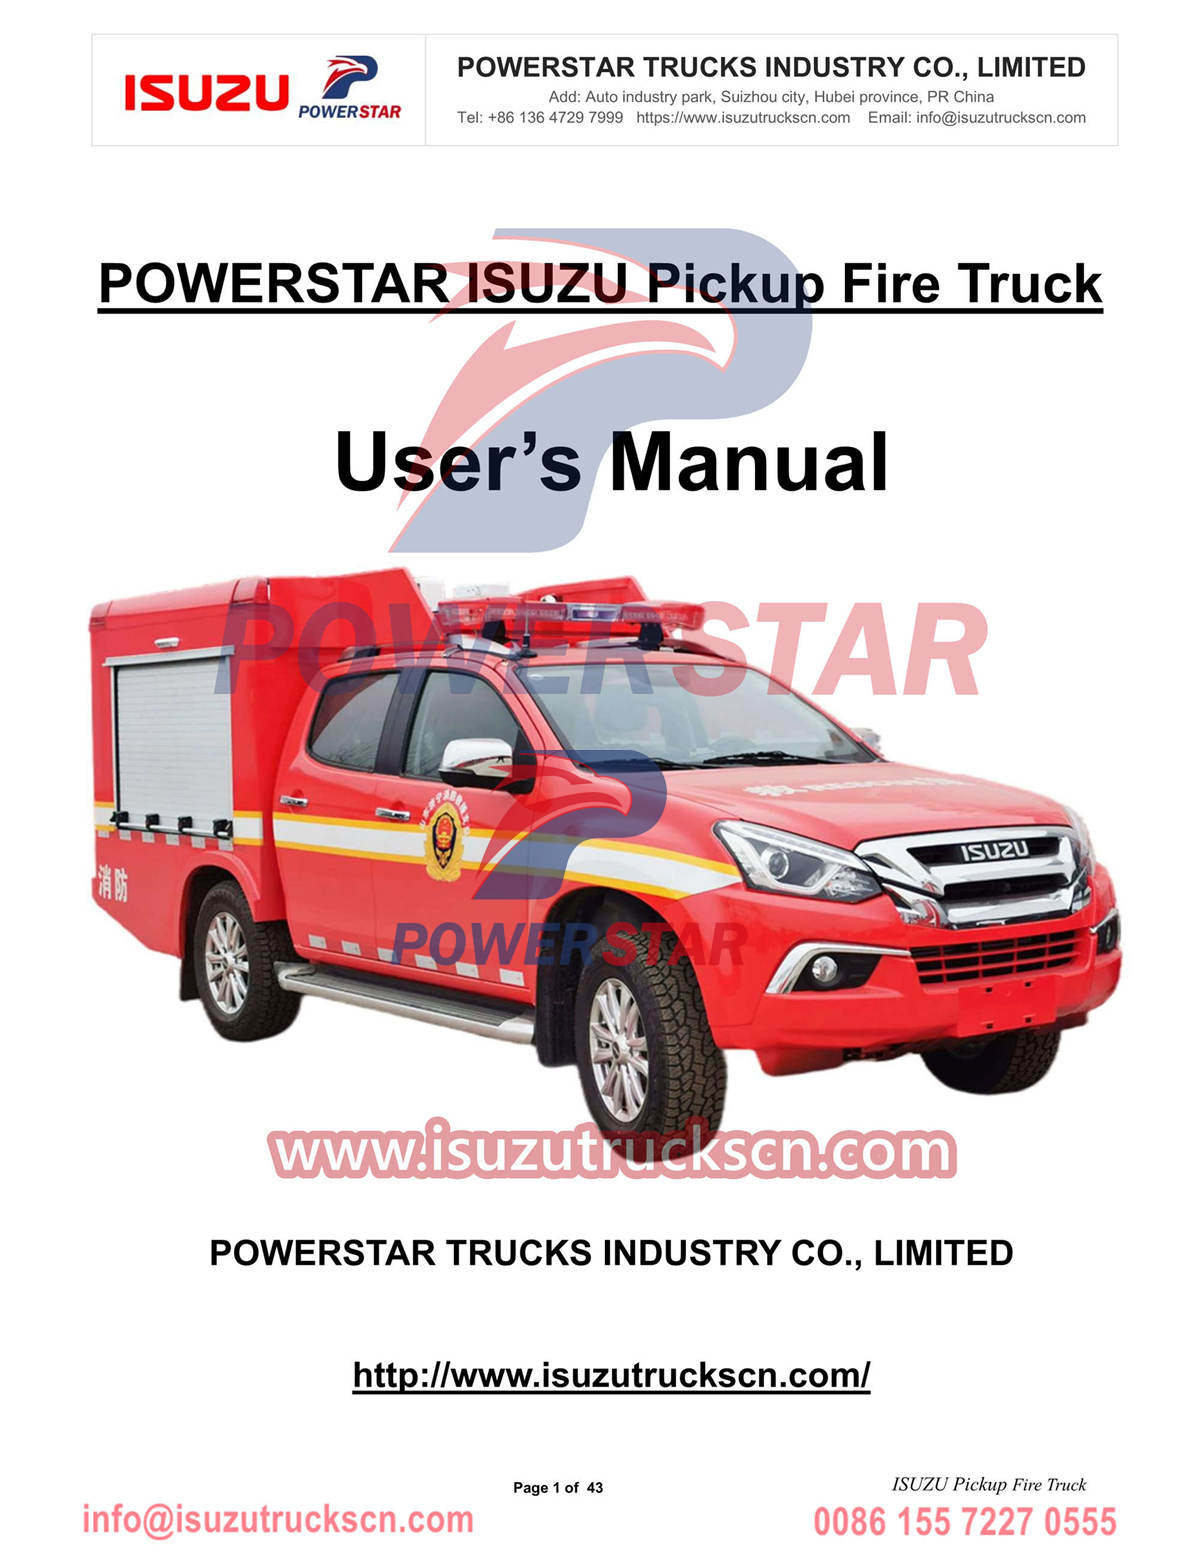 ISUZU pickup Fire Truck Manual for Philippines